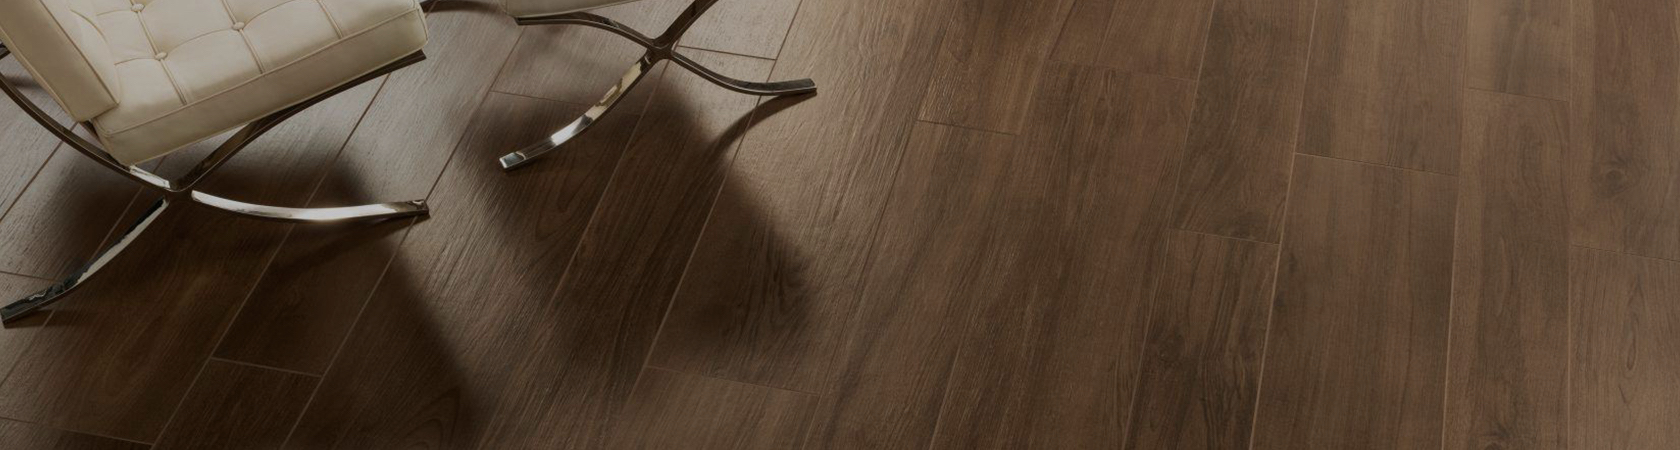 wood grained floor tile